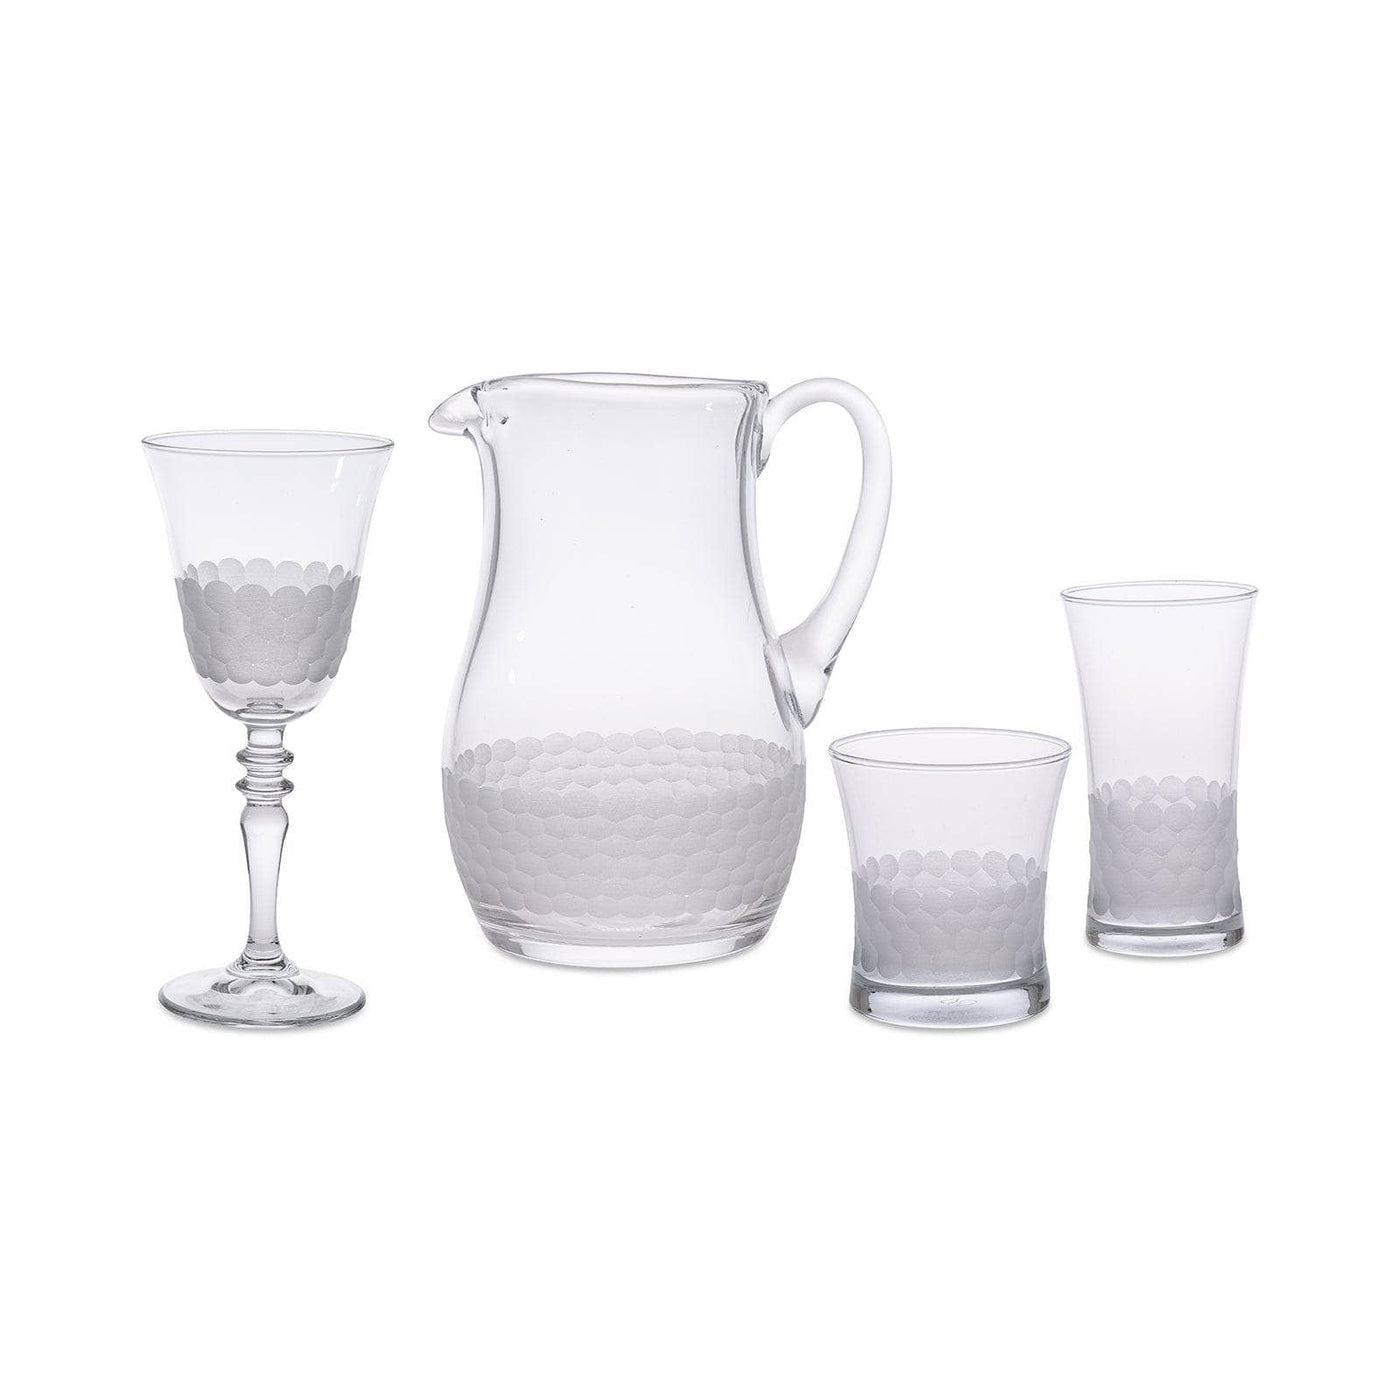 Bermondsey Set of 6 Glass Tumblers, White, 240 ml Glasses & Tumblers sazy.com